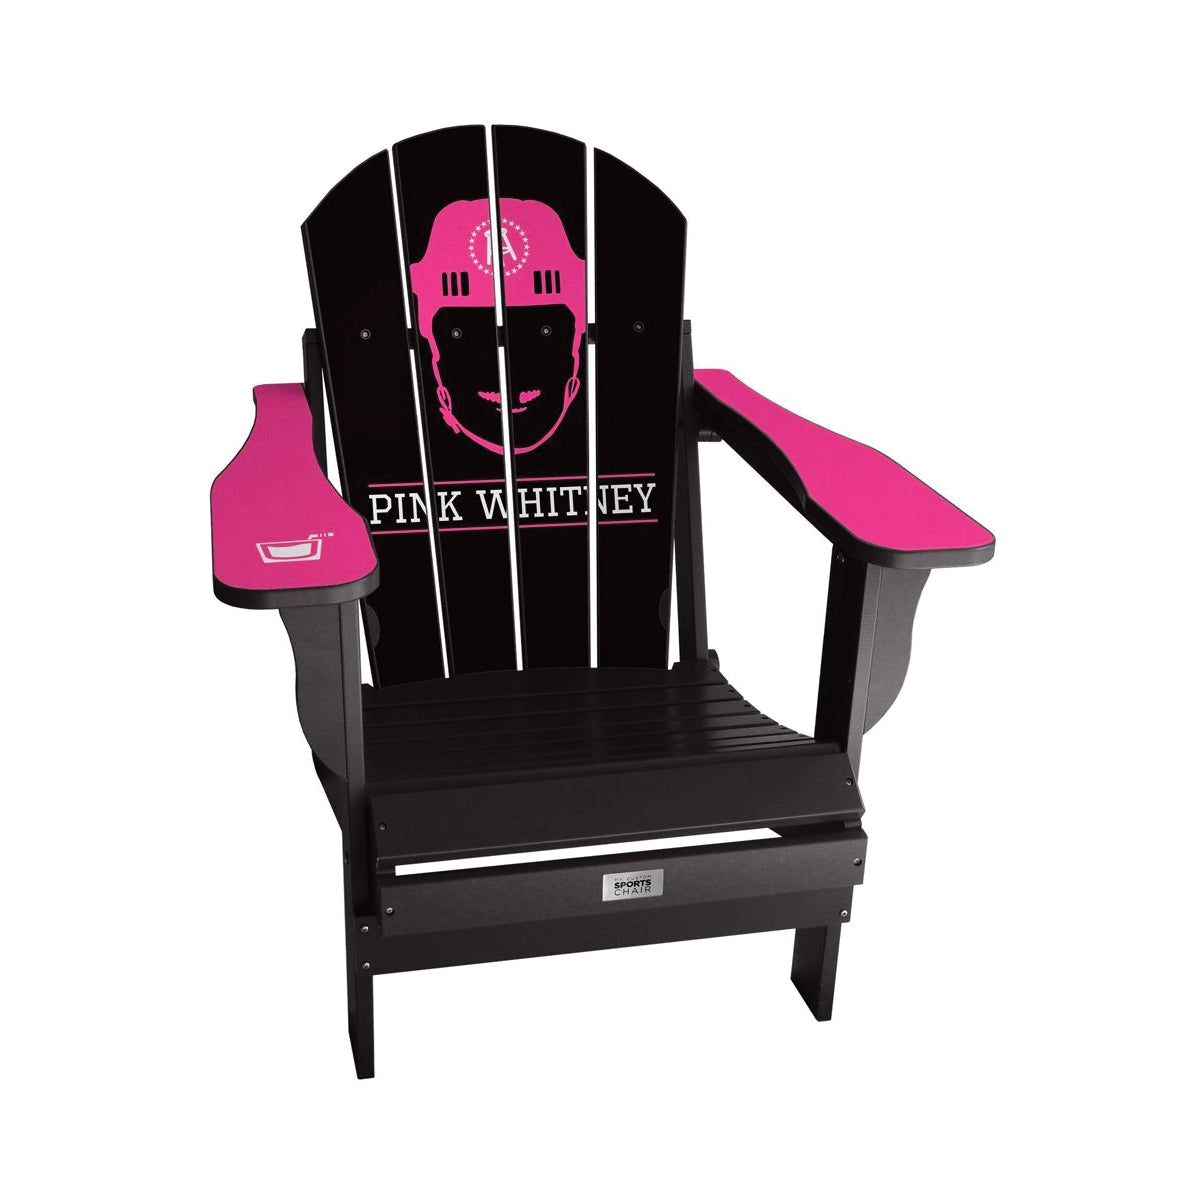 Pink Whitney Folding Adirondack Chair